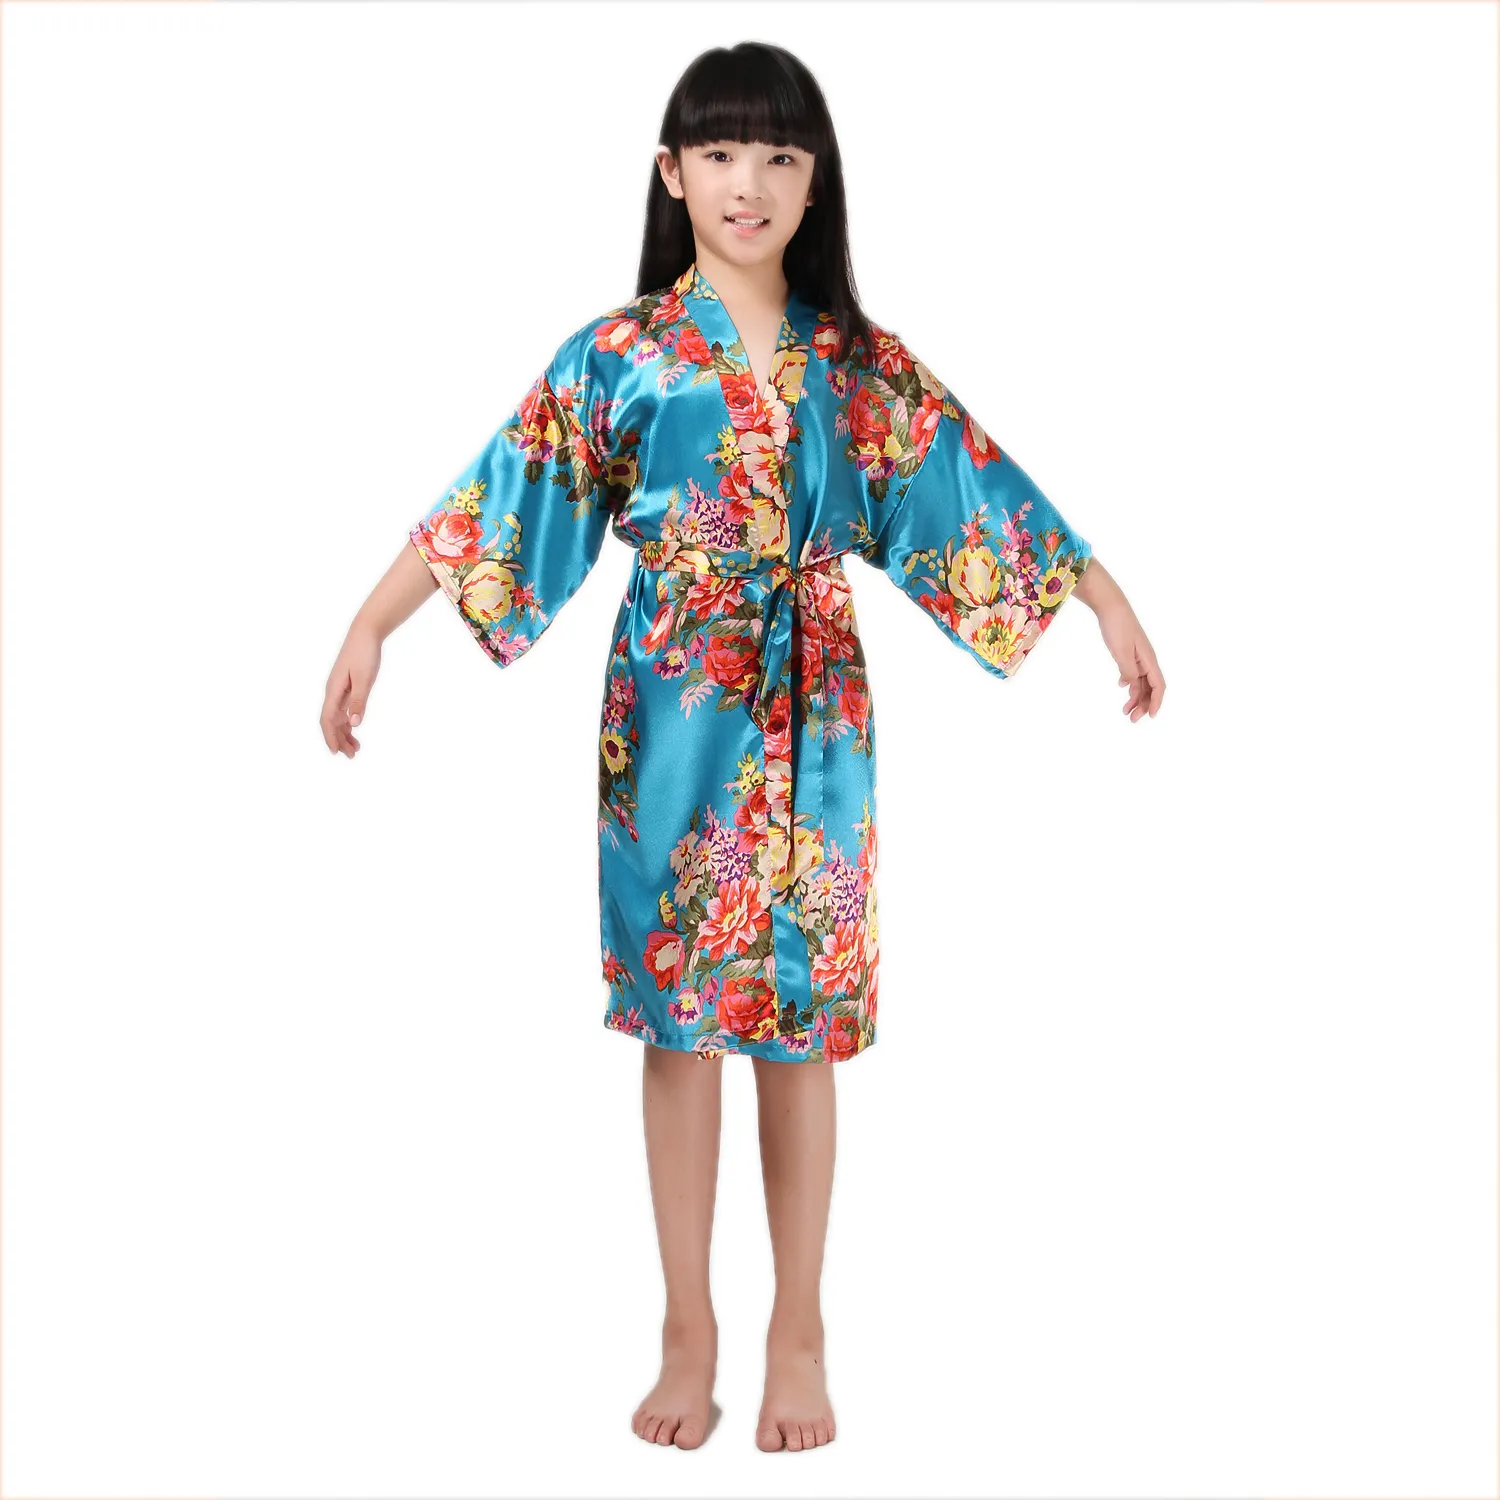 Bambini Satin Rayon Kimono Robe Stampa floreale Accappatoio Bambini Nighzown Spa Party Matrimonio Compleanno